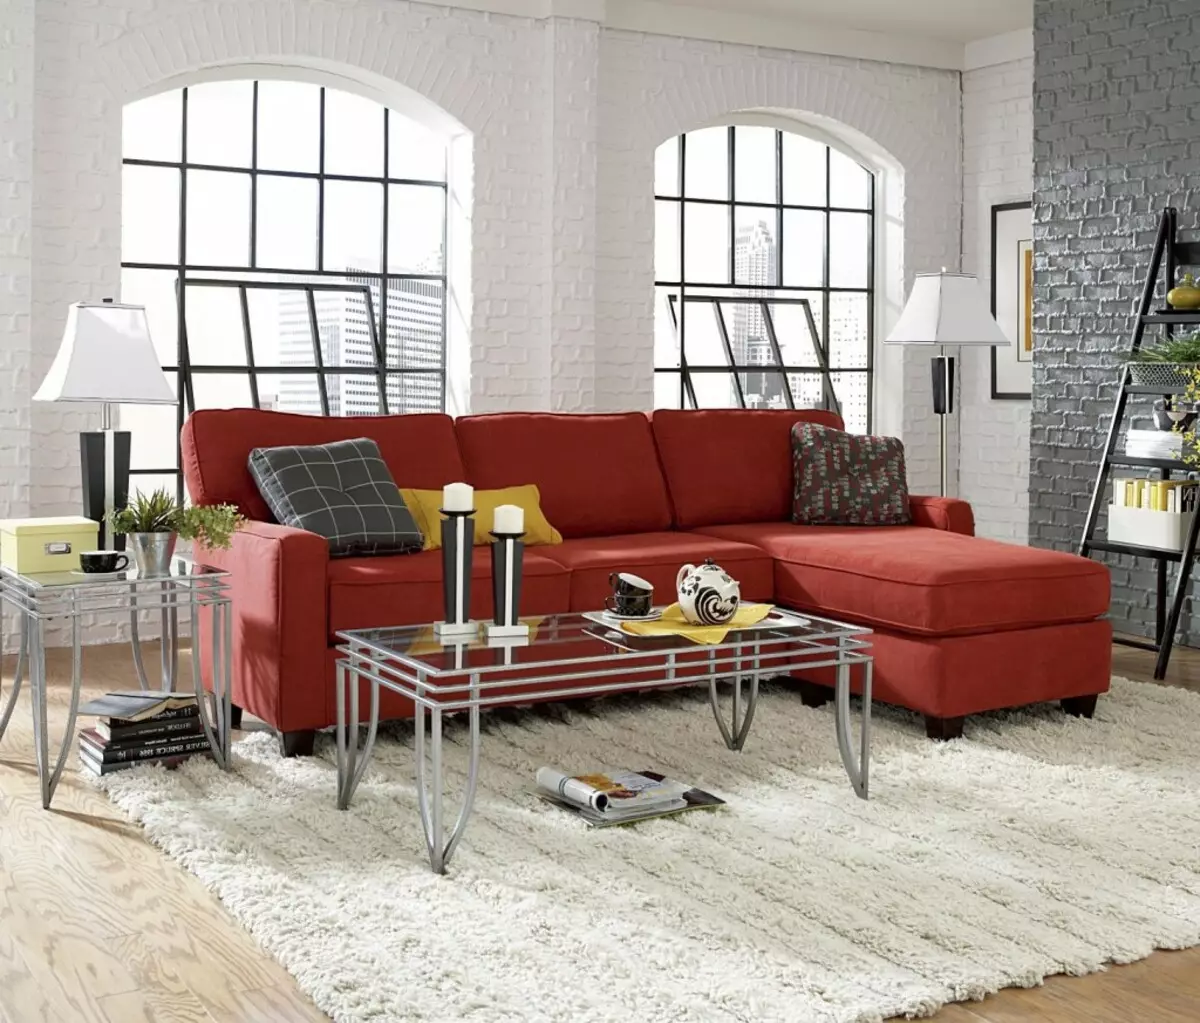 Living room with decorative brick